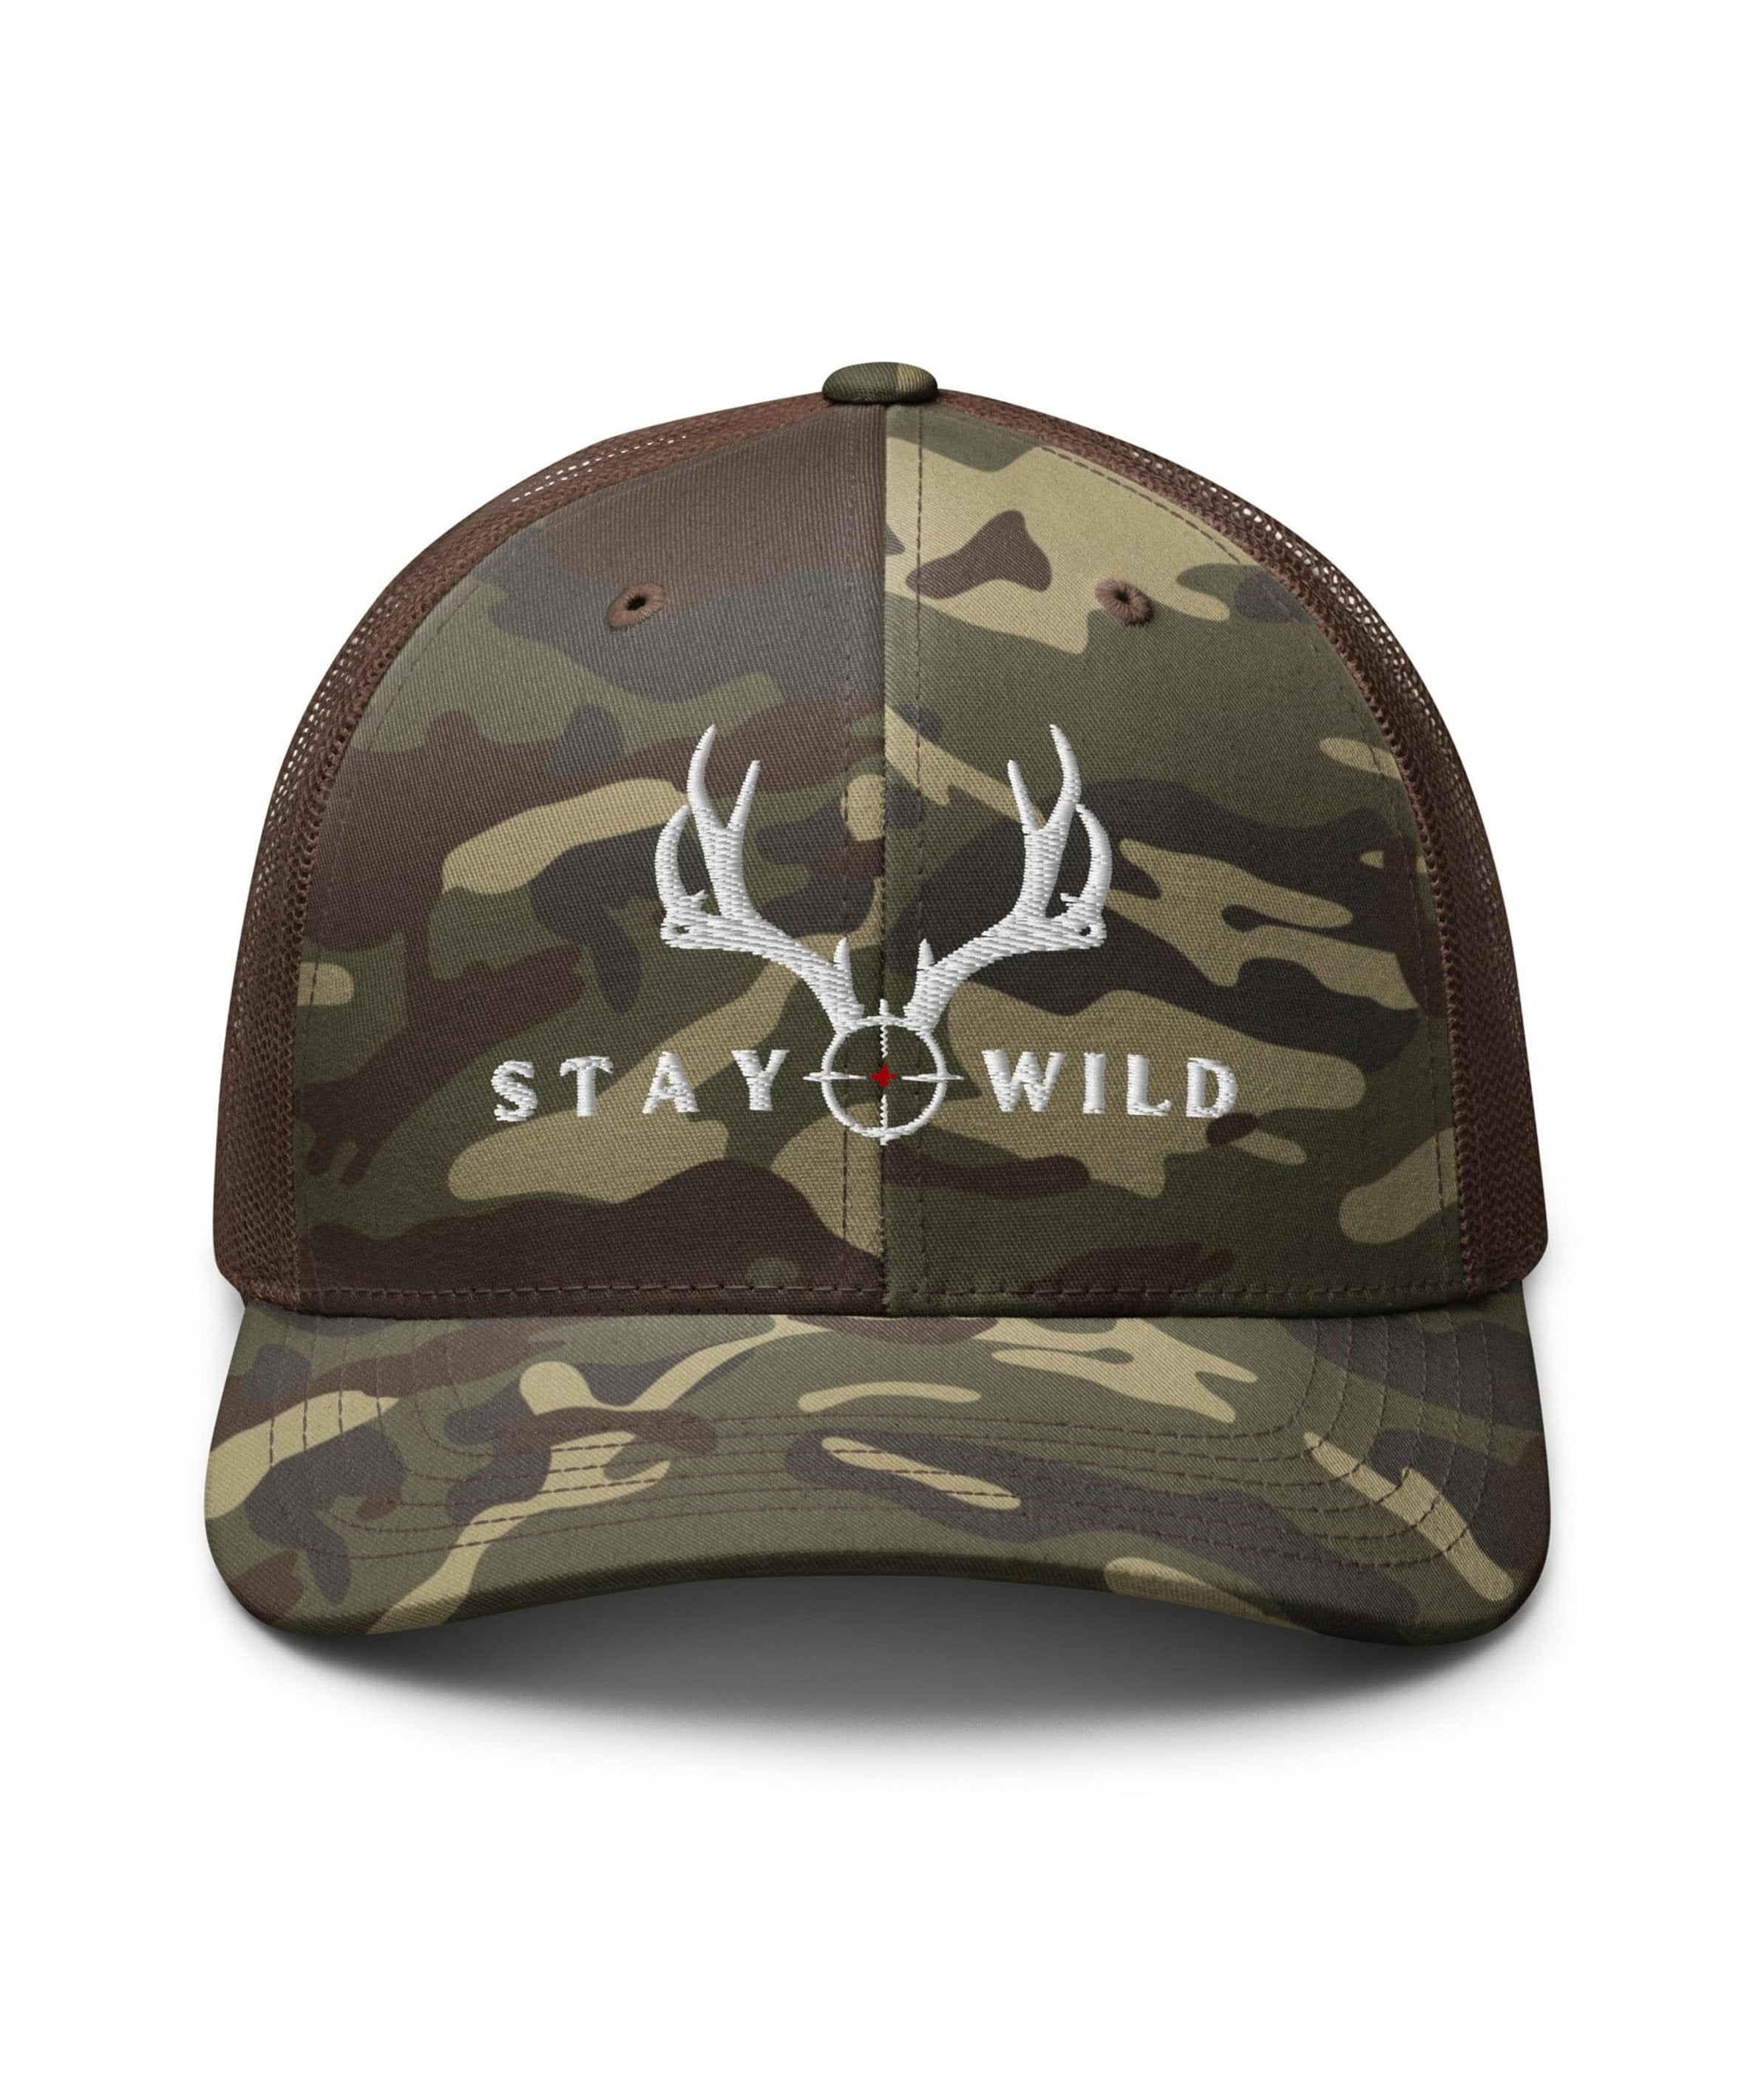 Stay Wild Camo Trucker Hat - Wilding Life